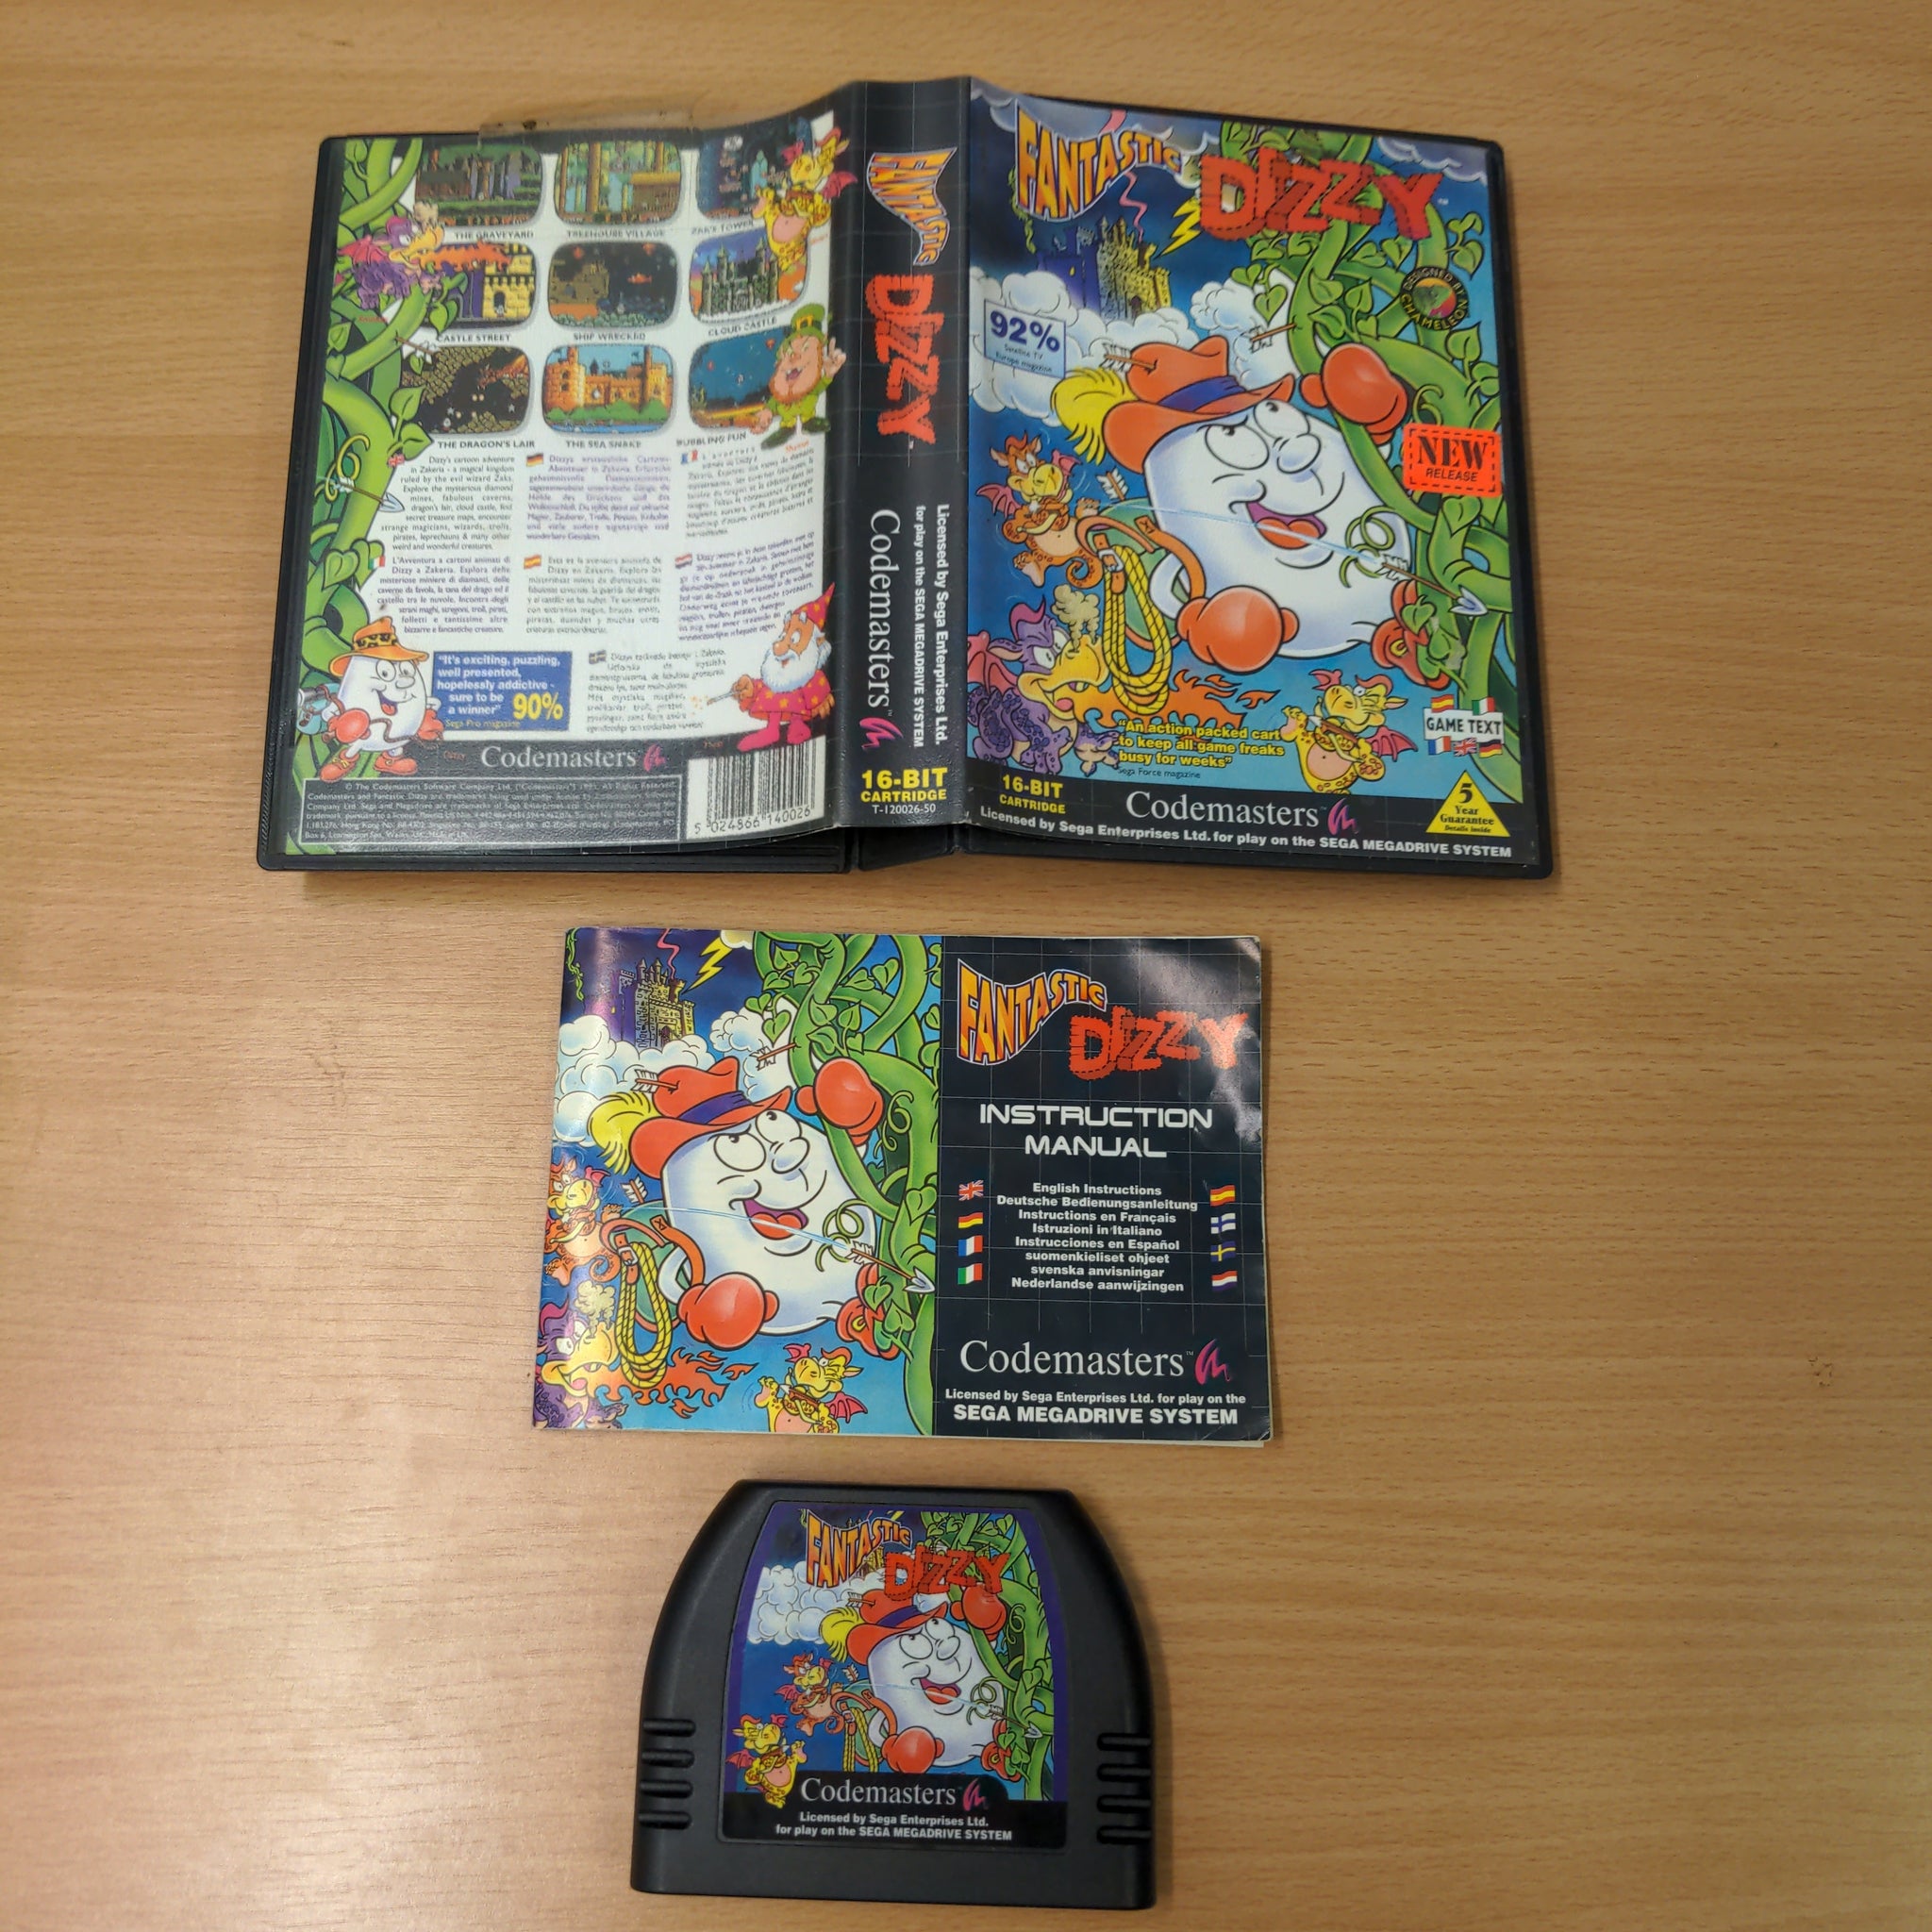 Fantastic Dizzy Sega Mega Drive game complete